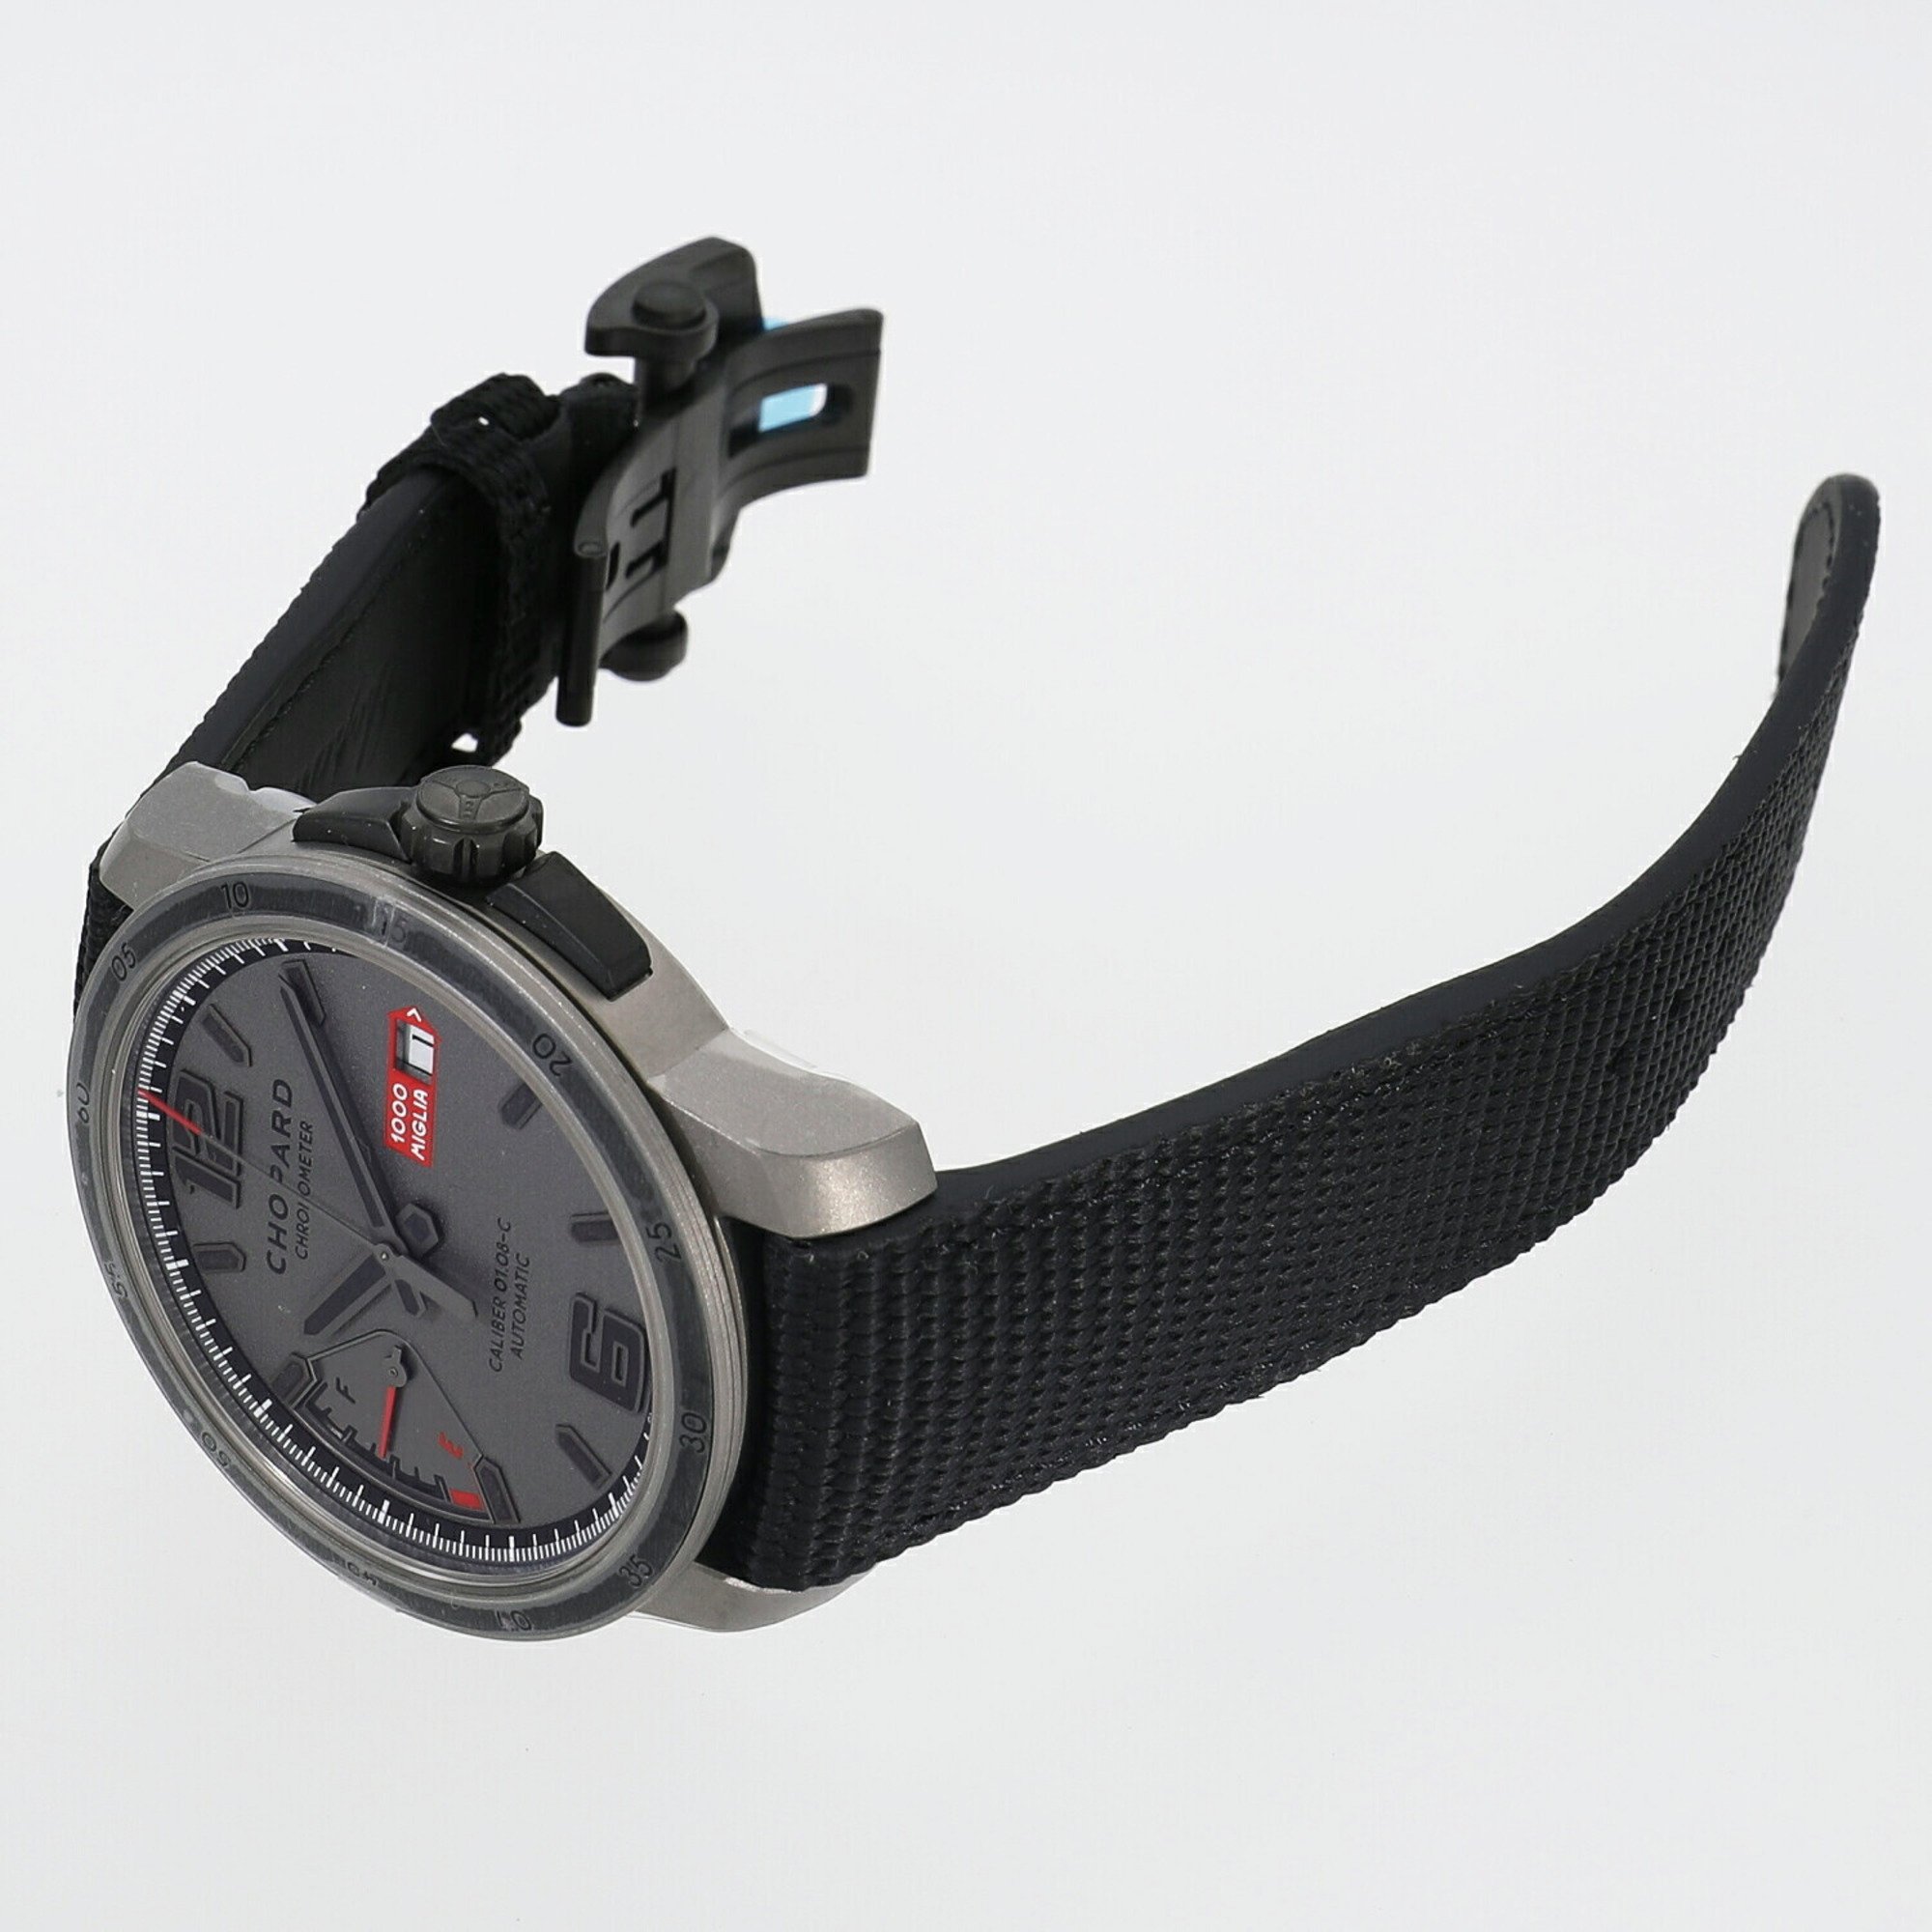 Chopard Mille Miglia GTS Power Control Grigio Speziale World Limited Edition 1000 168566-3007 / 16/8566-3007 Grey Men's Watch